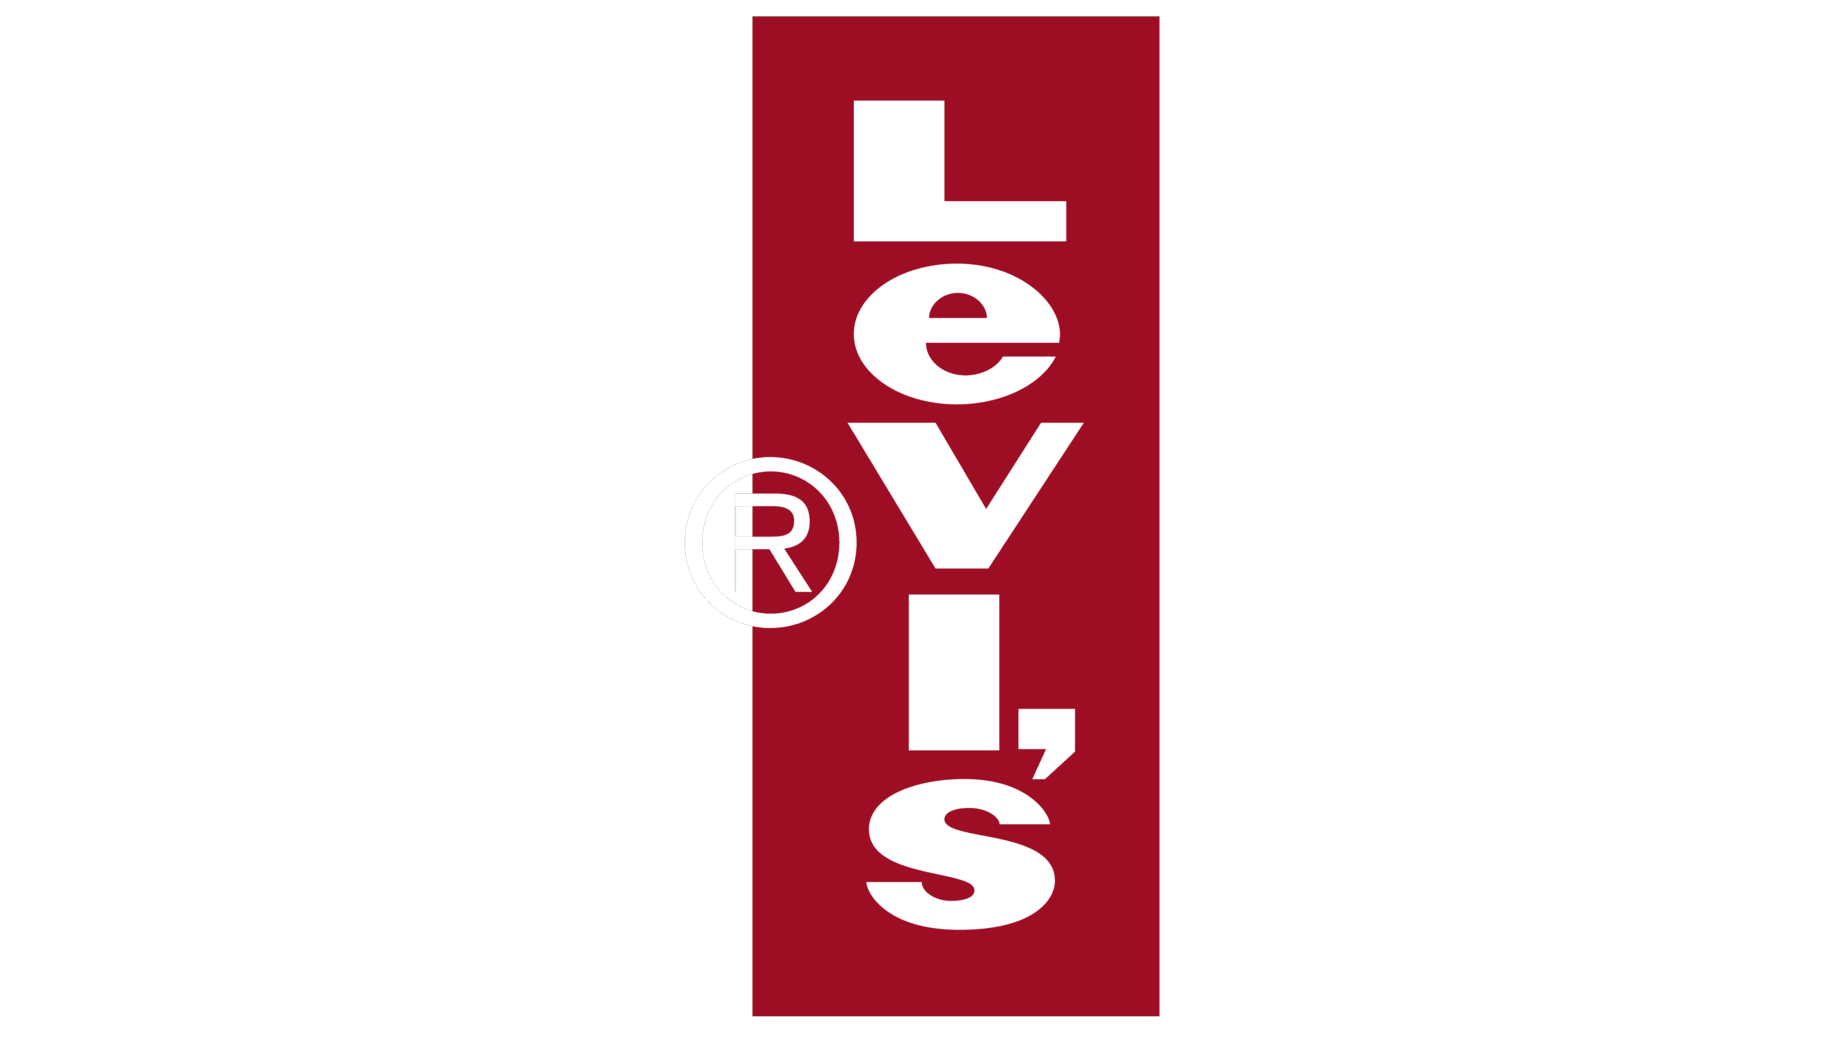 Levis symbol